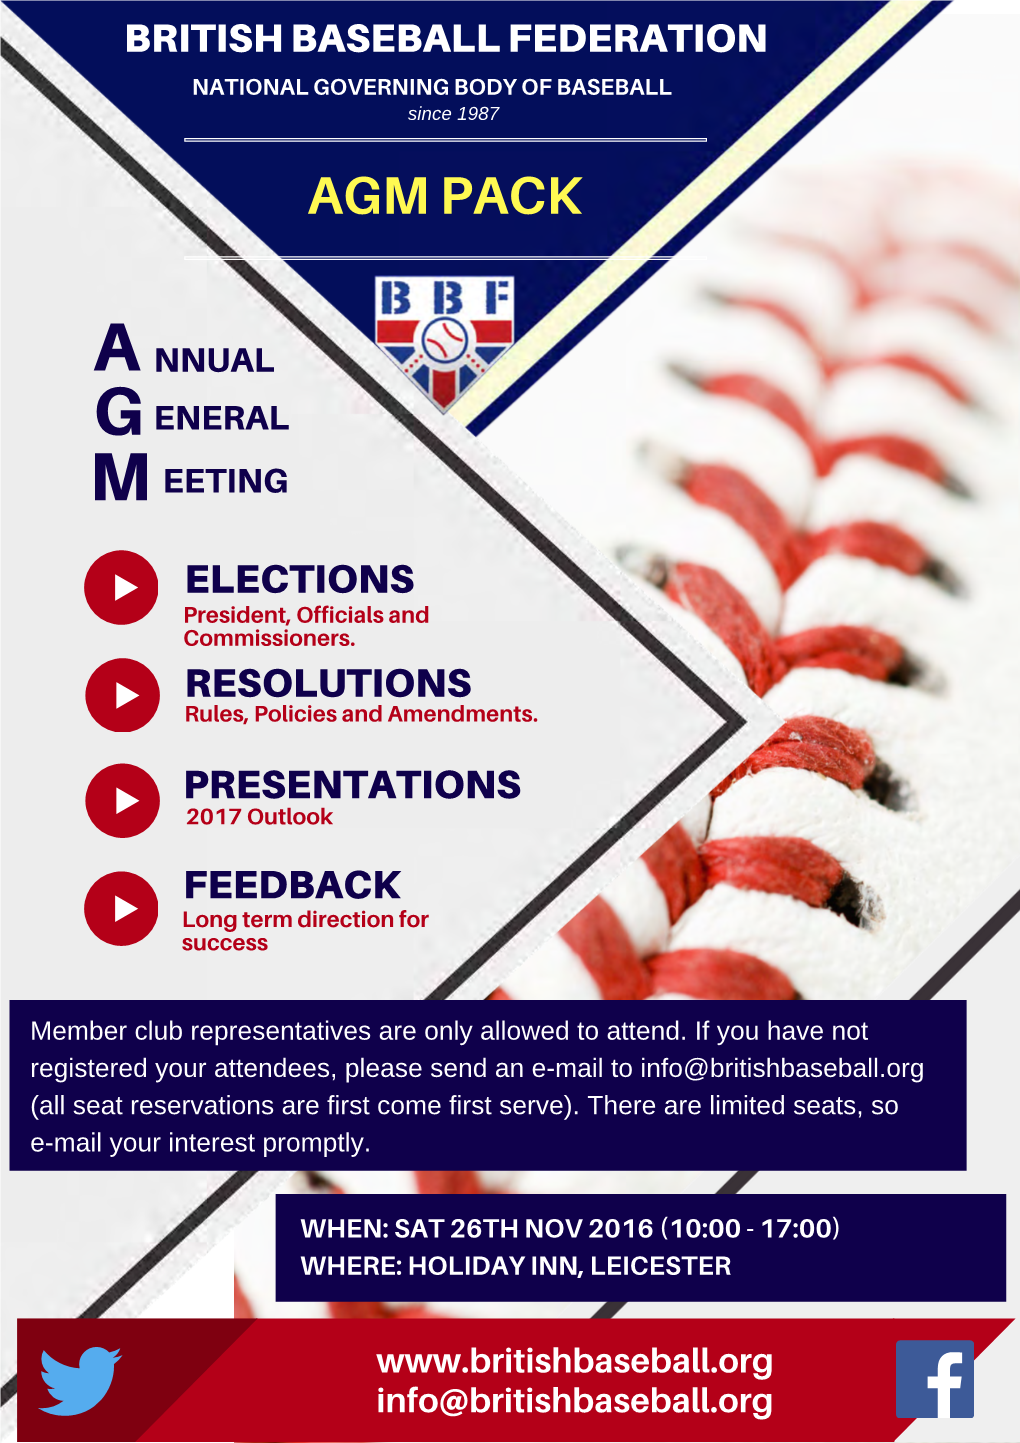 British Baseball Federation AGM Pack 2016